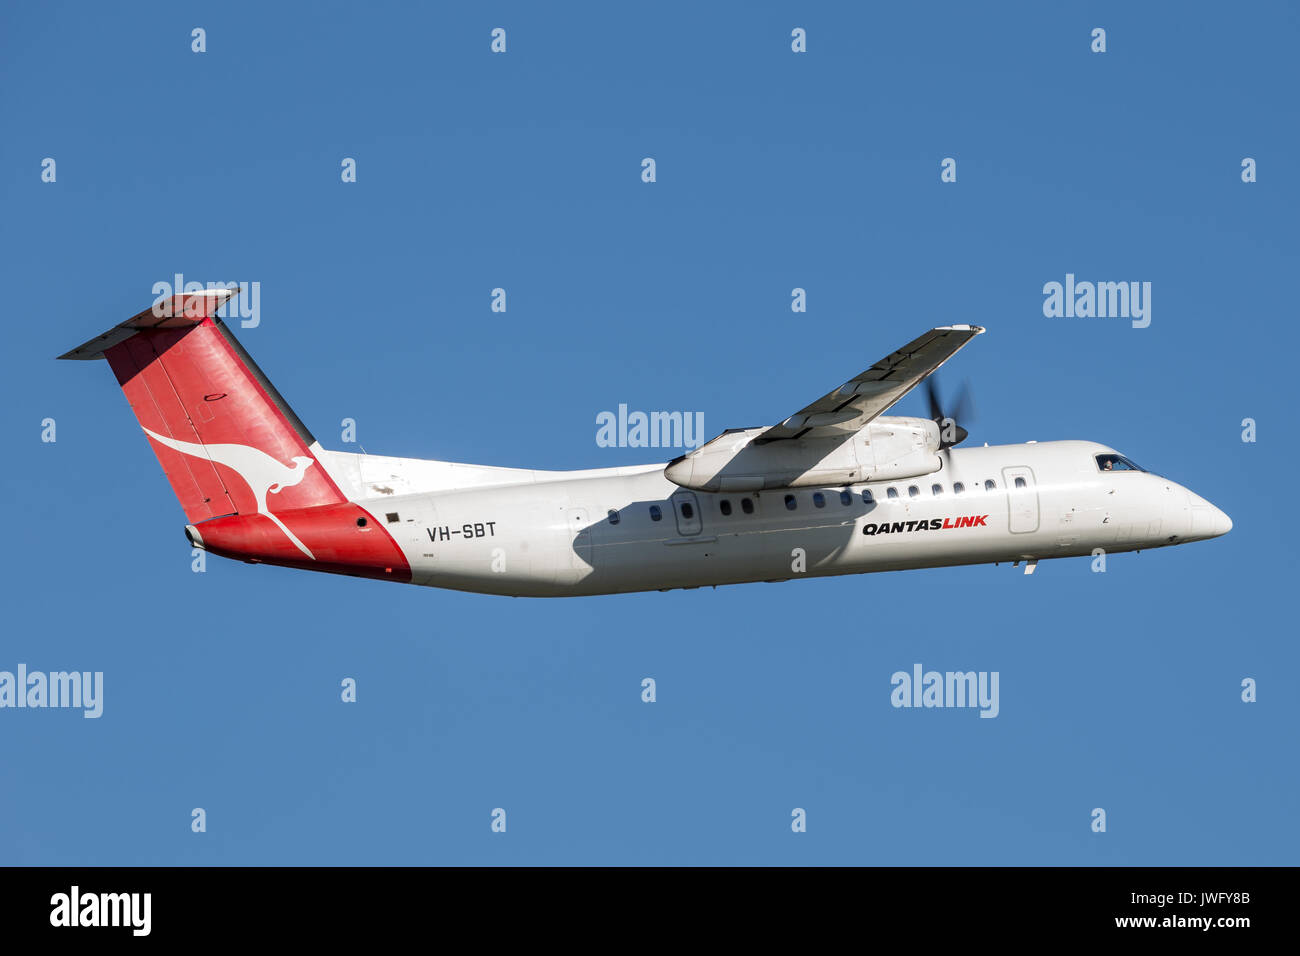 QantasLink (Qantas) deHavilland DHC-8 (Dash 8) twin engined regional airliner aircraft departing Sydney Airport. Stock Photo